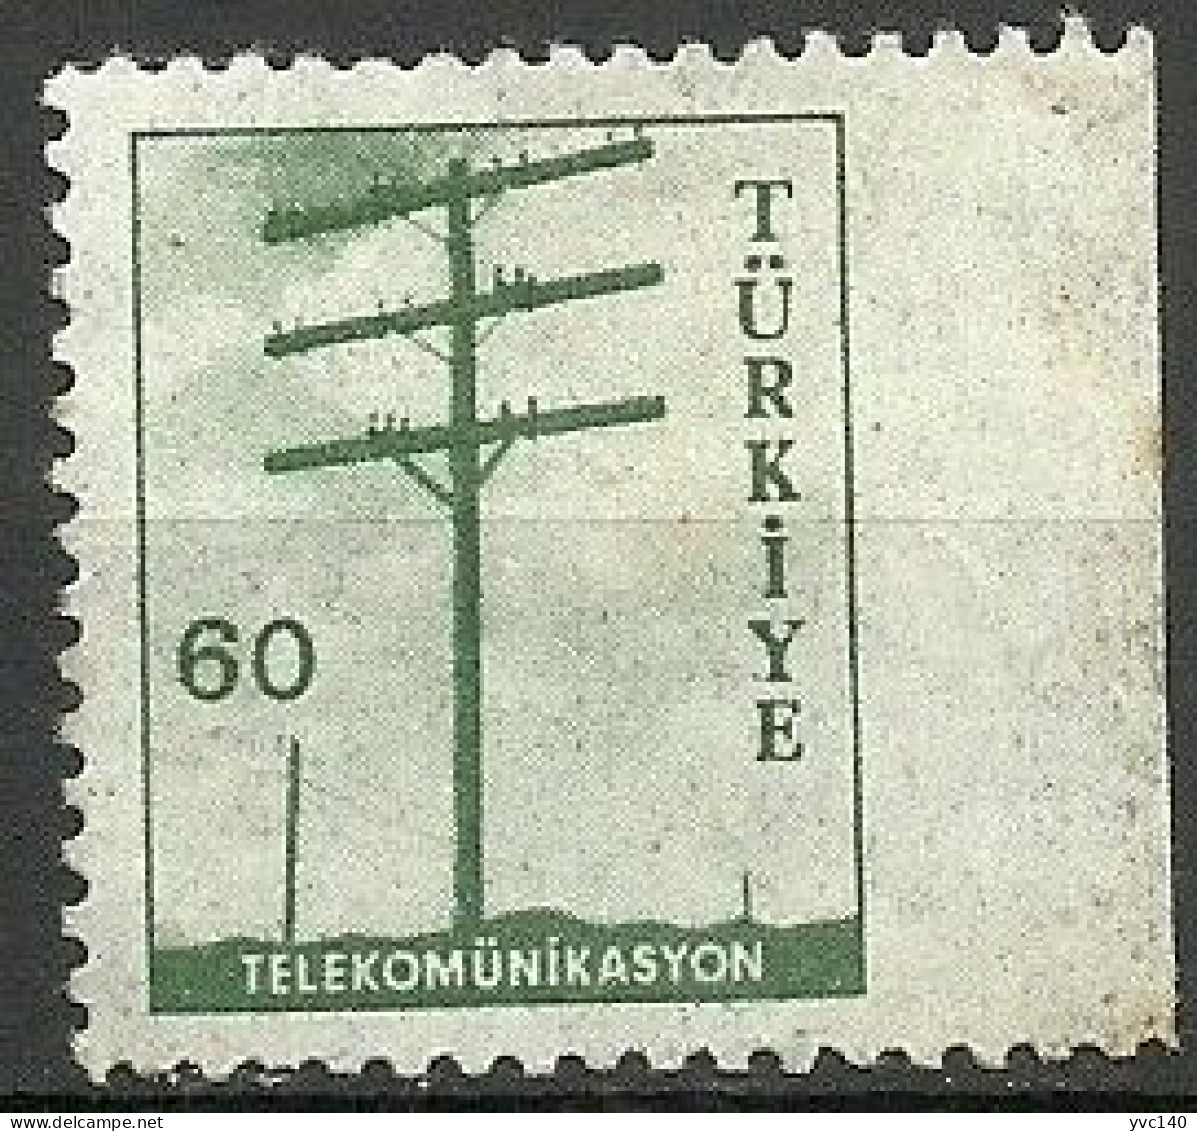 Turkey; 1959 Pictorial Postage Stamp 60 K. ERROR "Imperf. Edge" - Ongebruikt